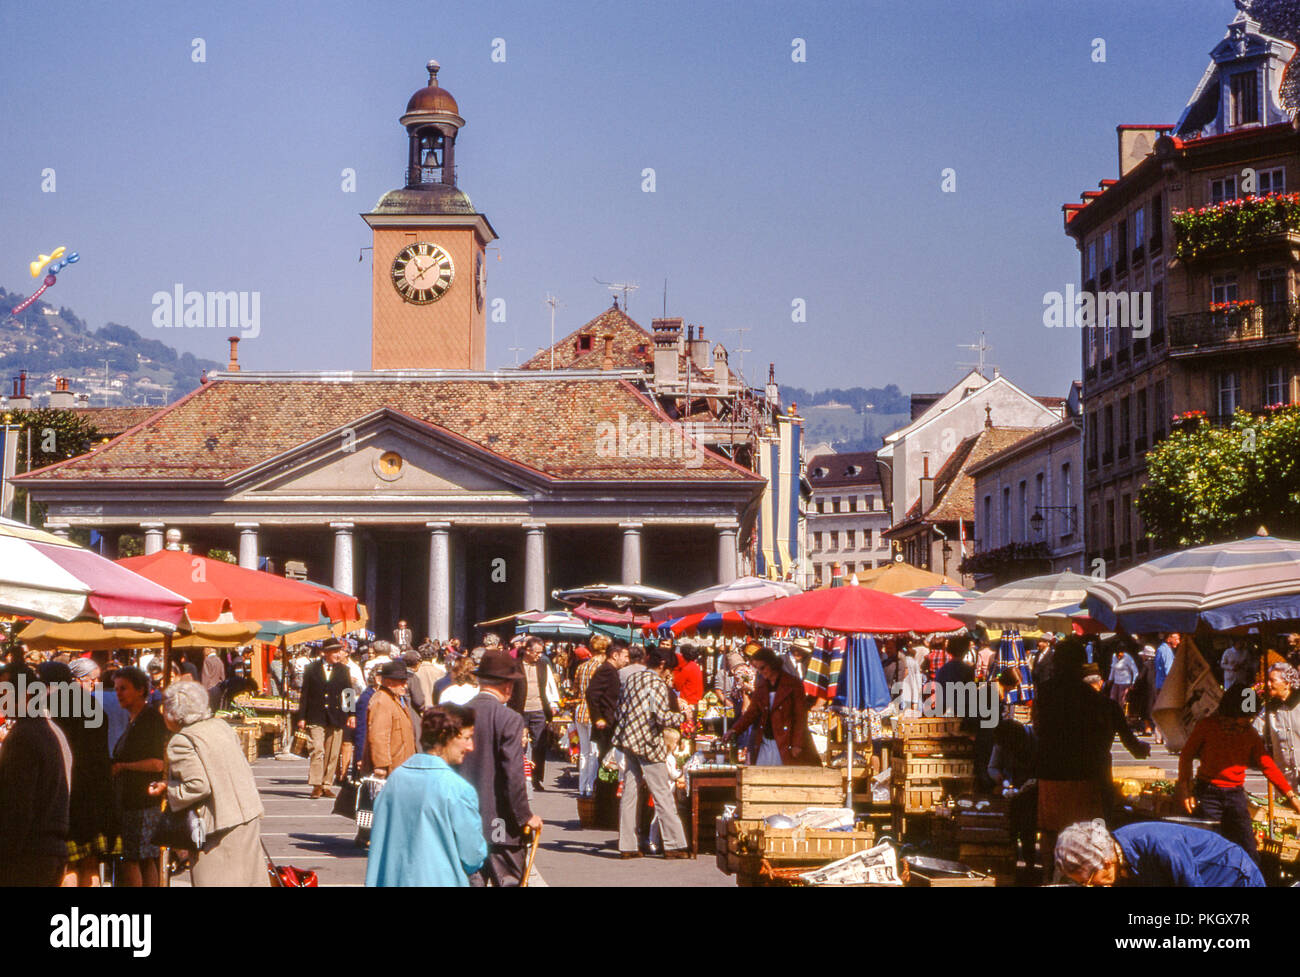 La Grenette, Vevey Market in the Canton of Vaud, Switzerland. Original archive image taken in September 1971. Stock Photo